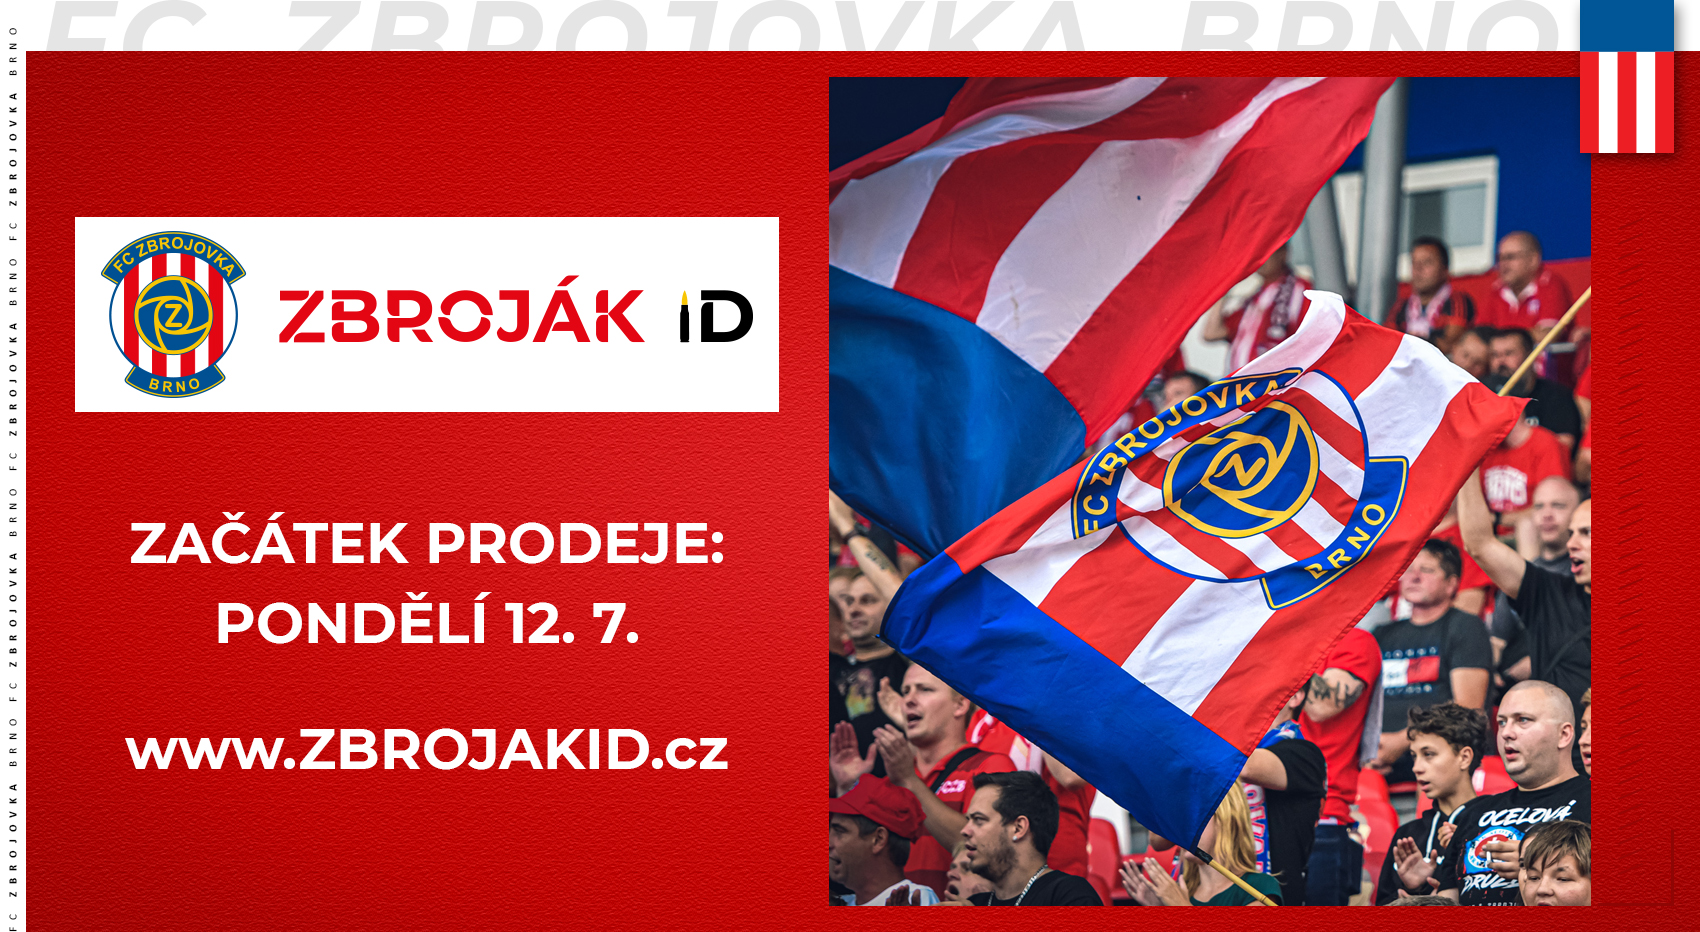 Dnes spoutme uniktn systm prodeje lstk a permanentek  Zbrojk ID!